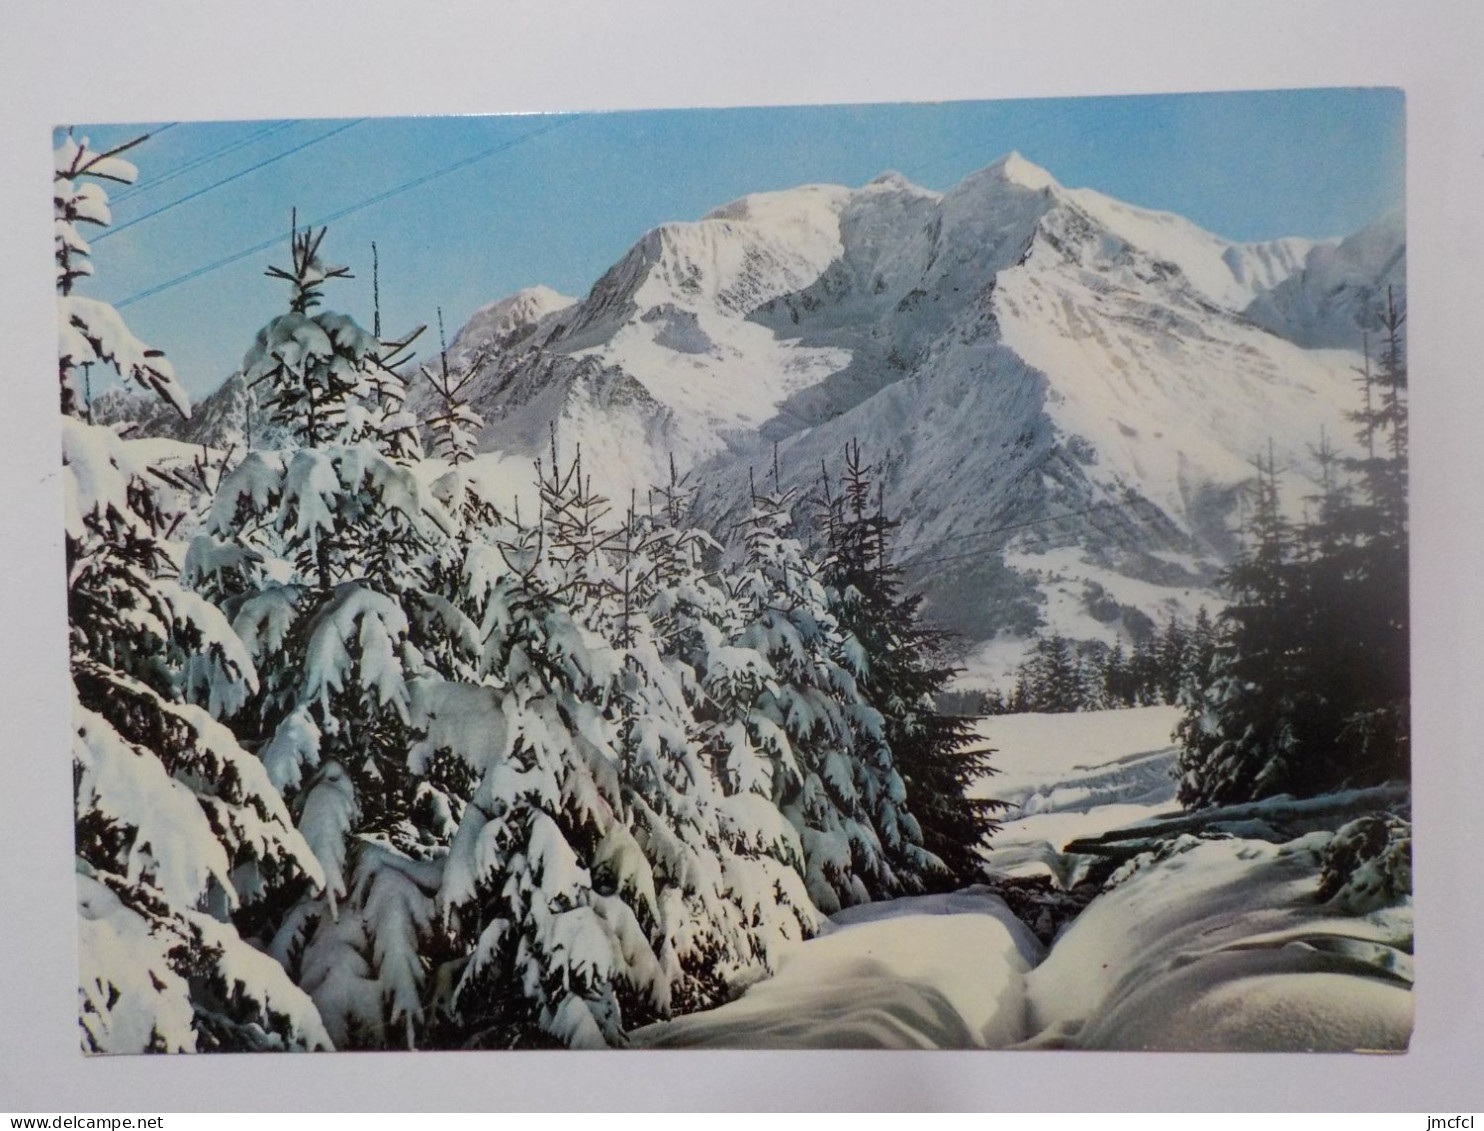 LES ALPES (Savoie-Haute Savoie-Hautes Alpes-Alpes de Haute Provence) Lots de 67 Cartes a 0.20 euros l'une